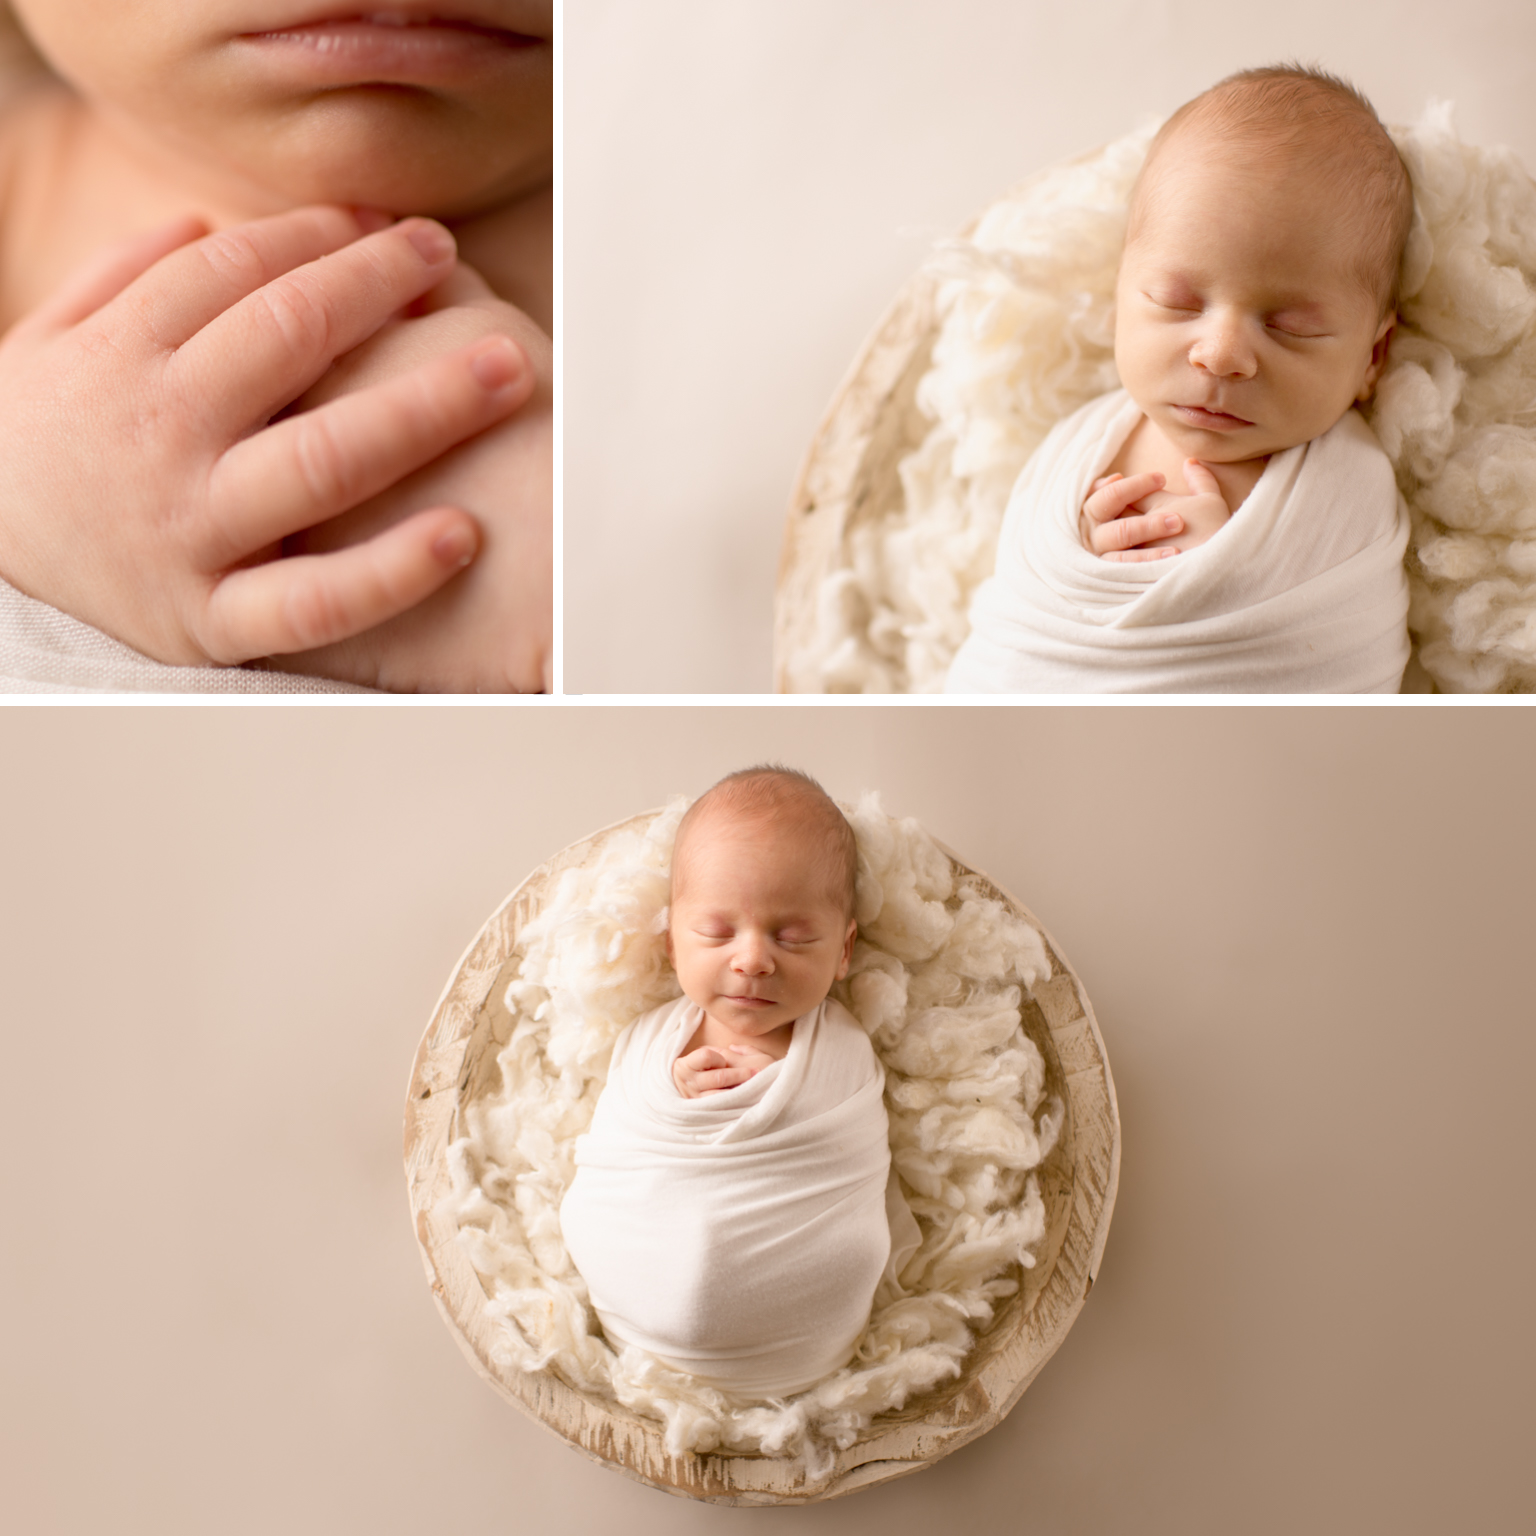 Simple, classic, williamsport photography newborn session boy neuturals details